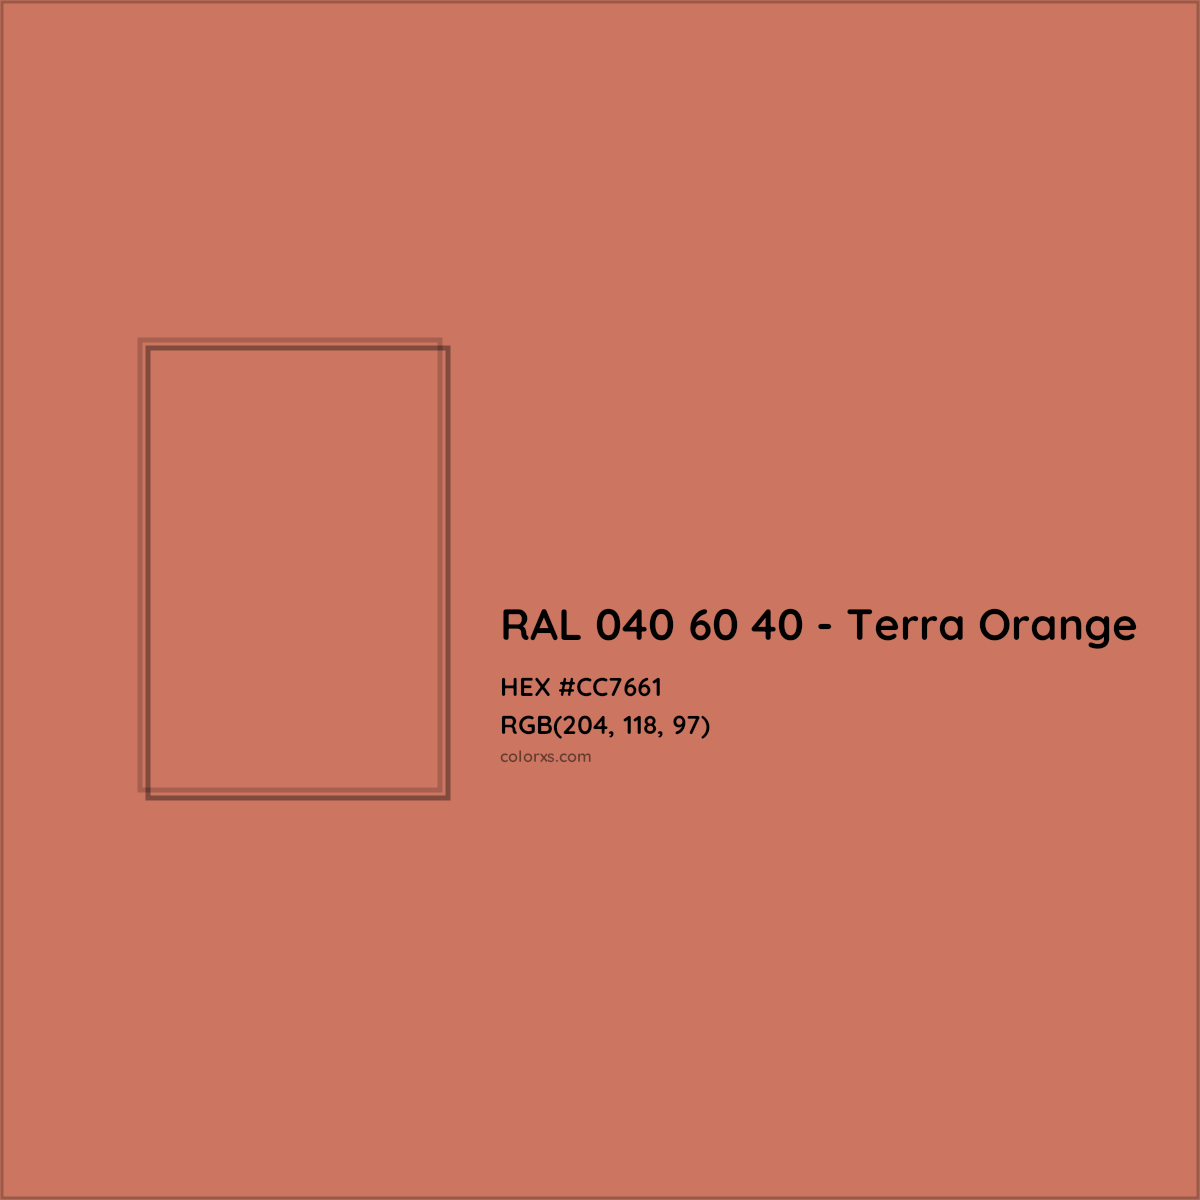 HEX #CC7661 RAL 040 60 40 - Terra Orange CMS RAL Design - Color Code